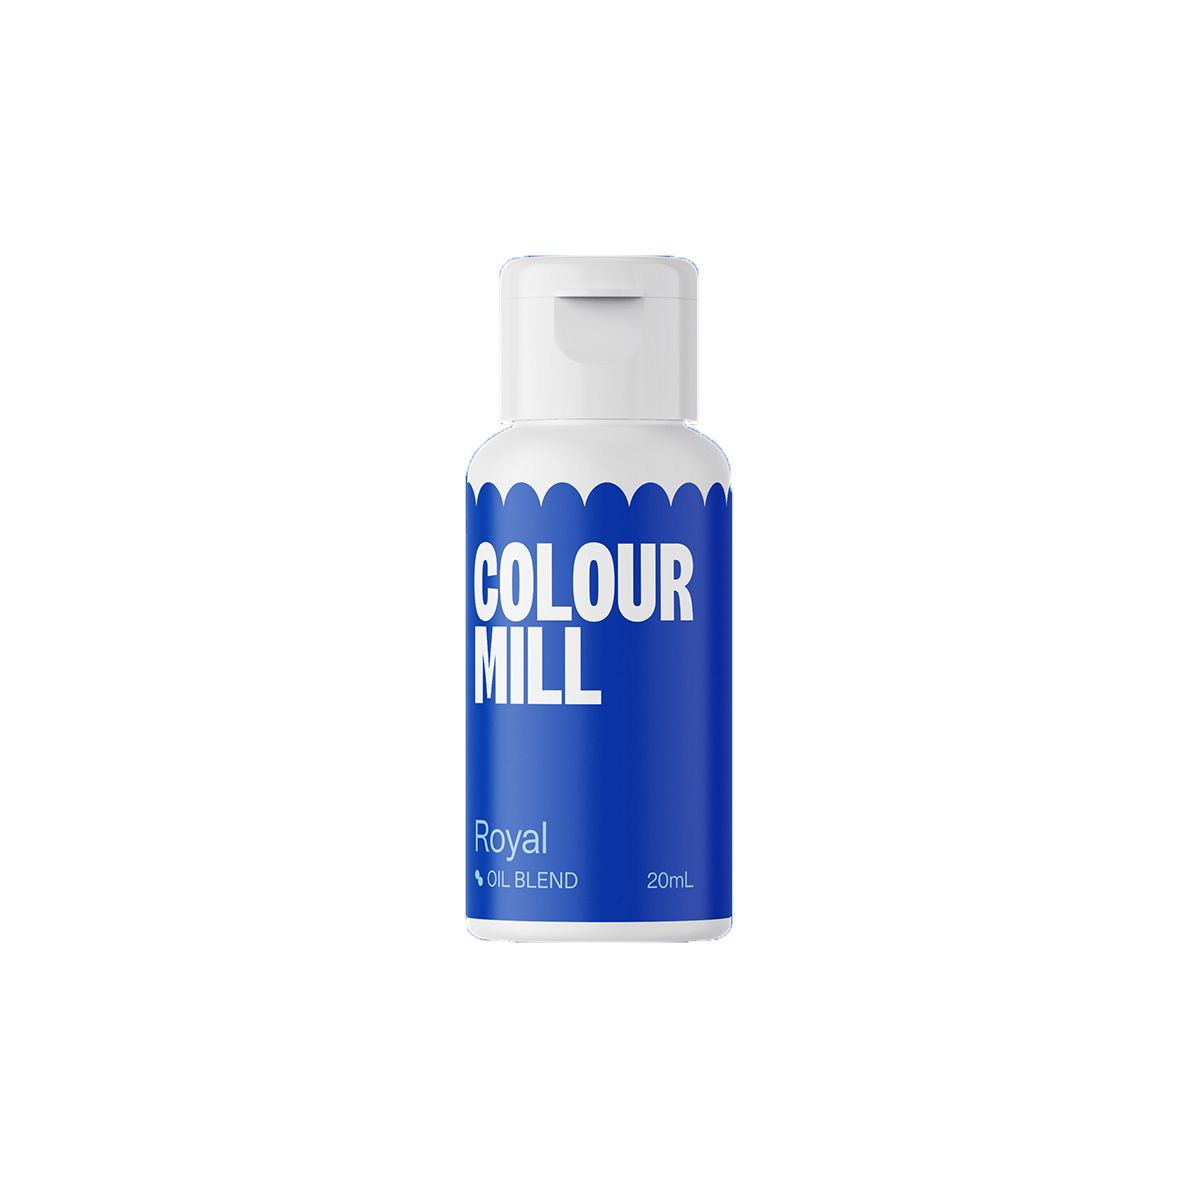 Colour Mill Oil Blend - Royal